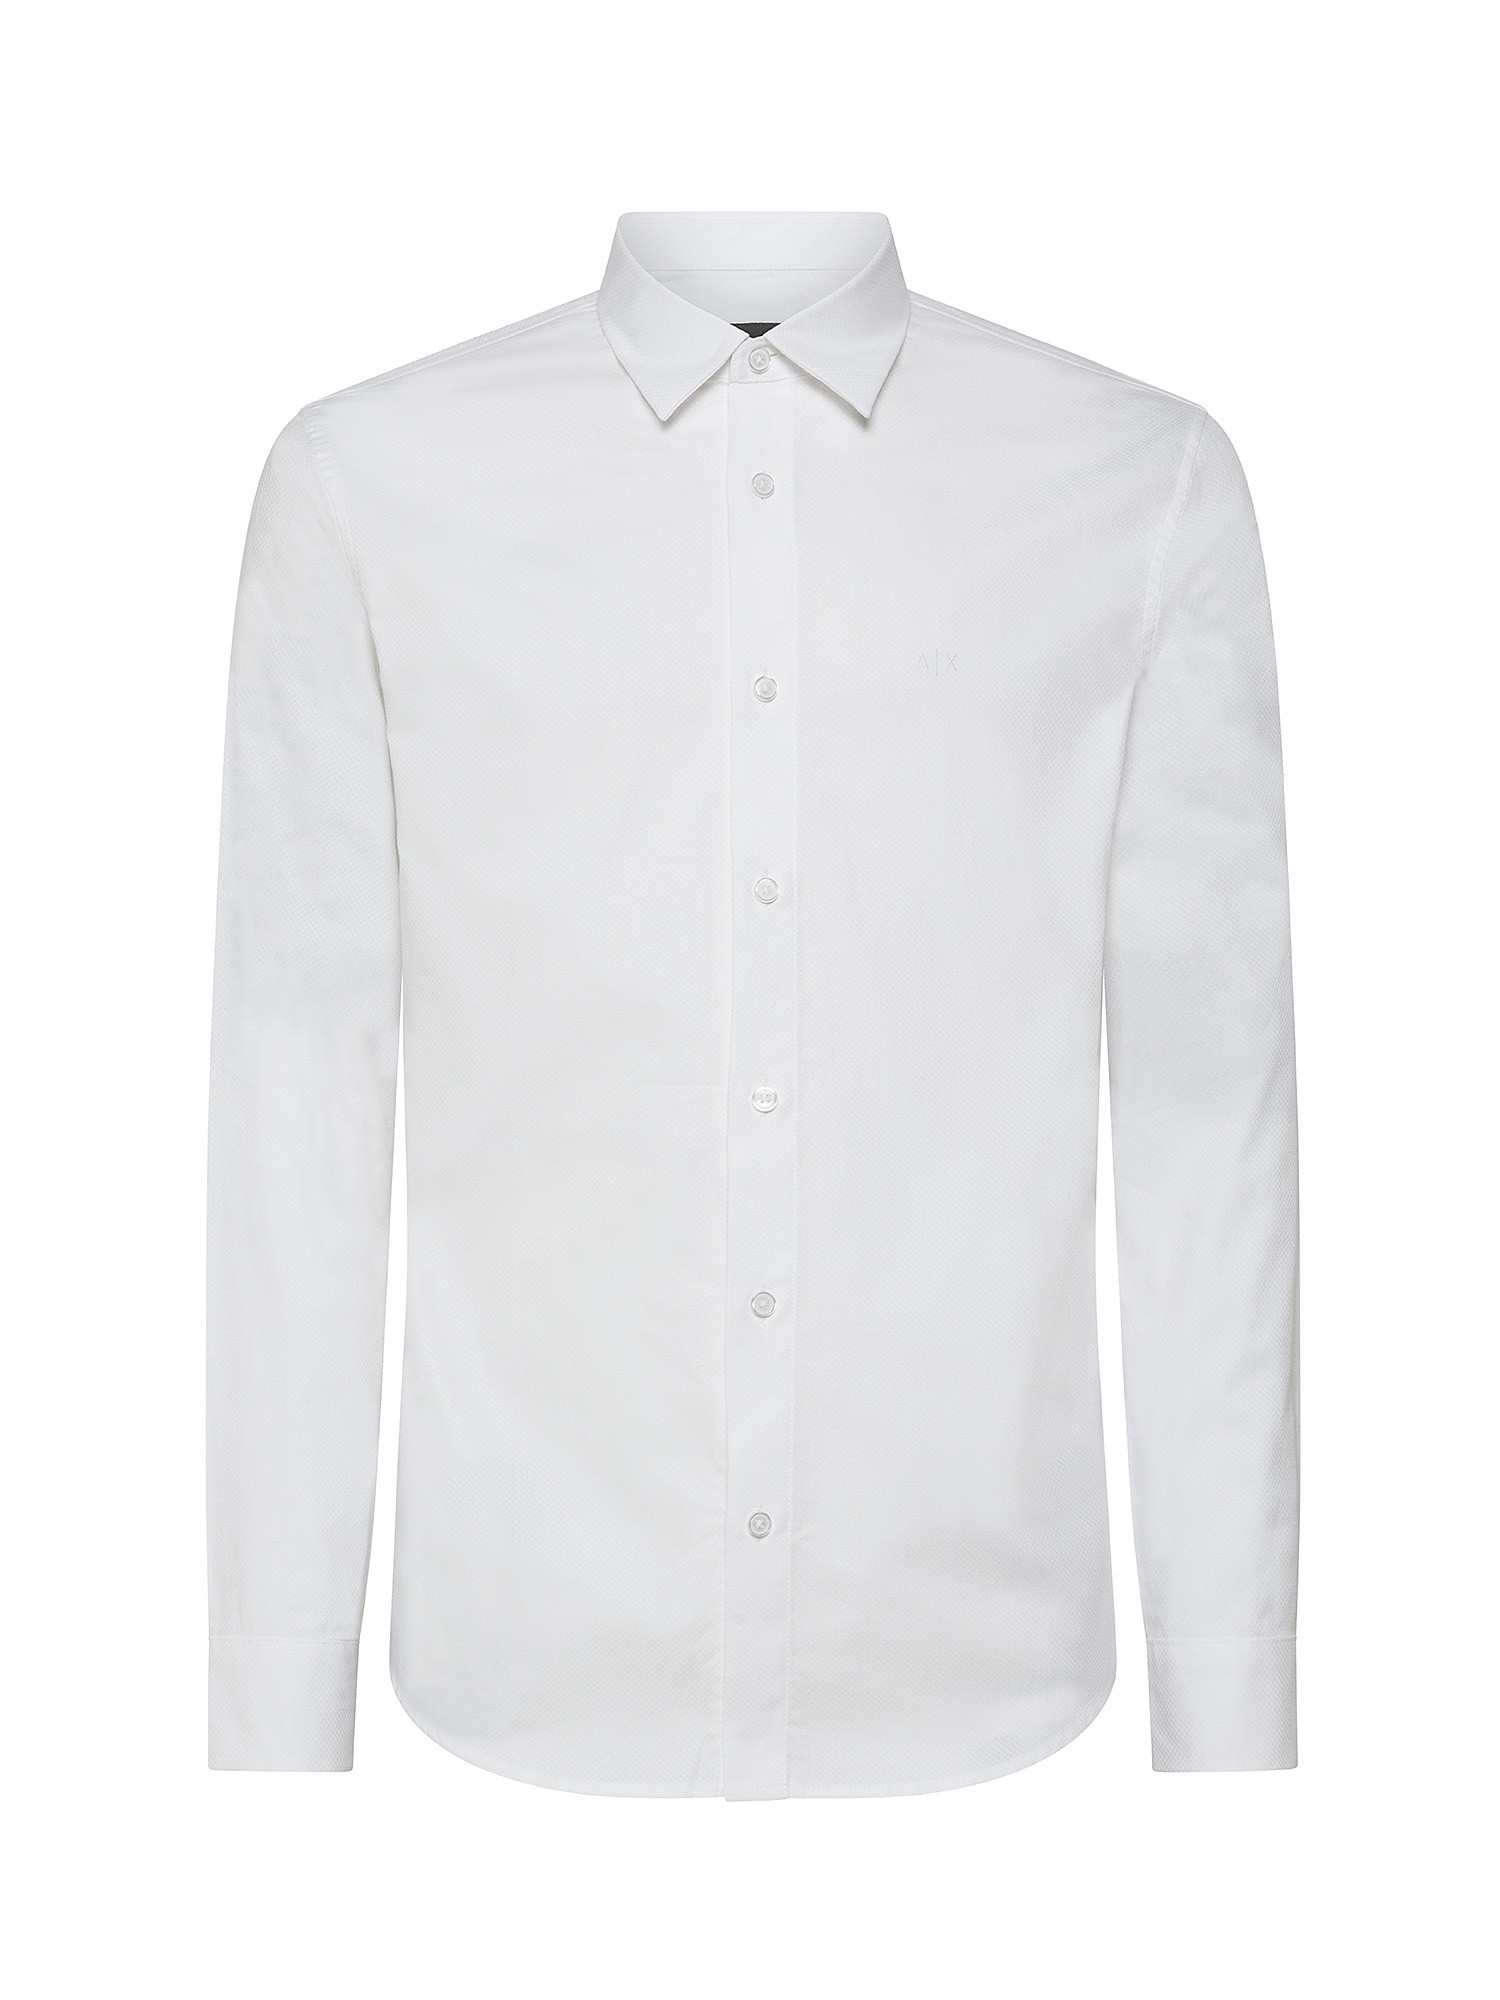 Armani Exchange - Regular fit shirt in cotton, White, large image number 1